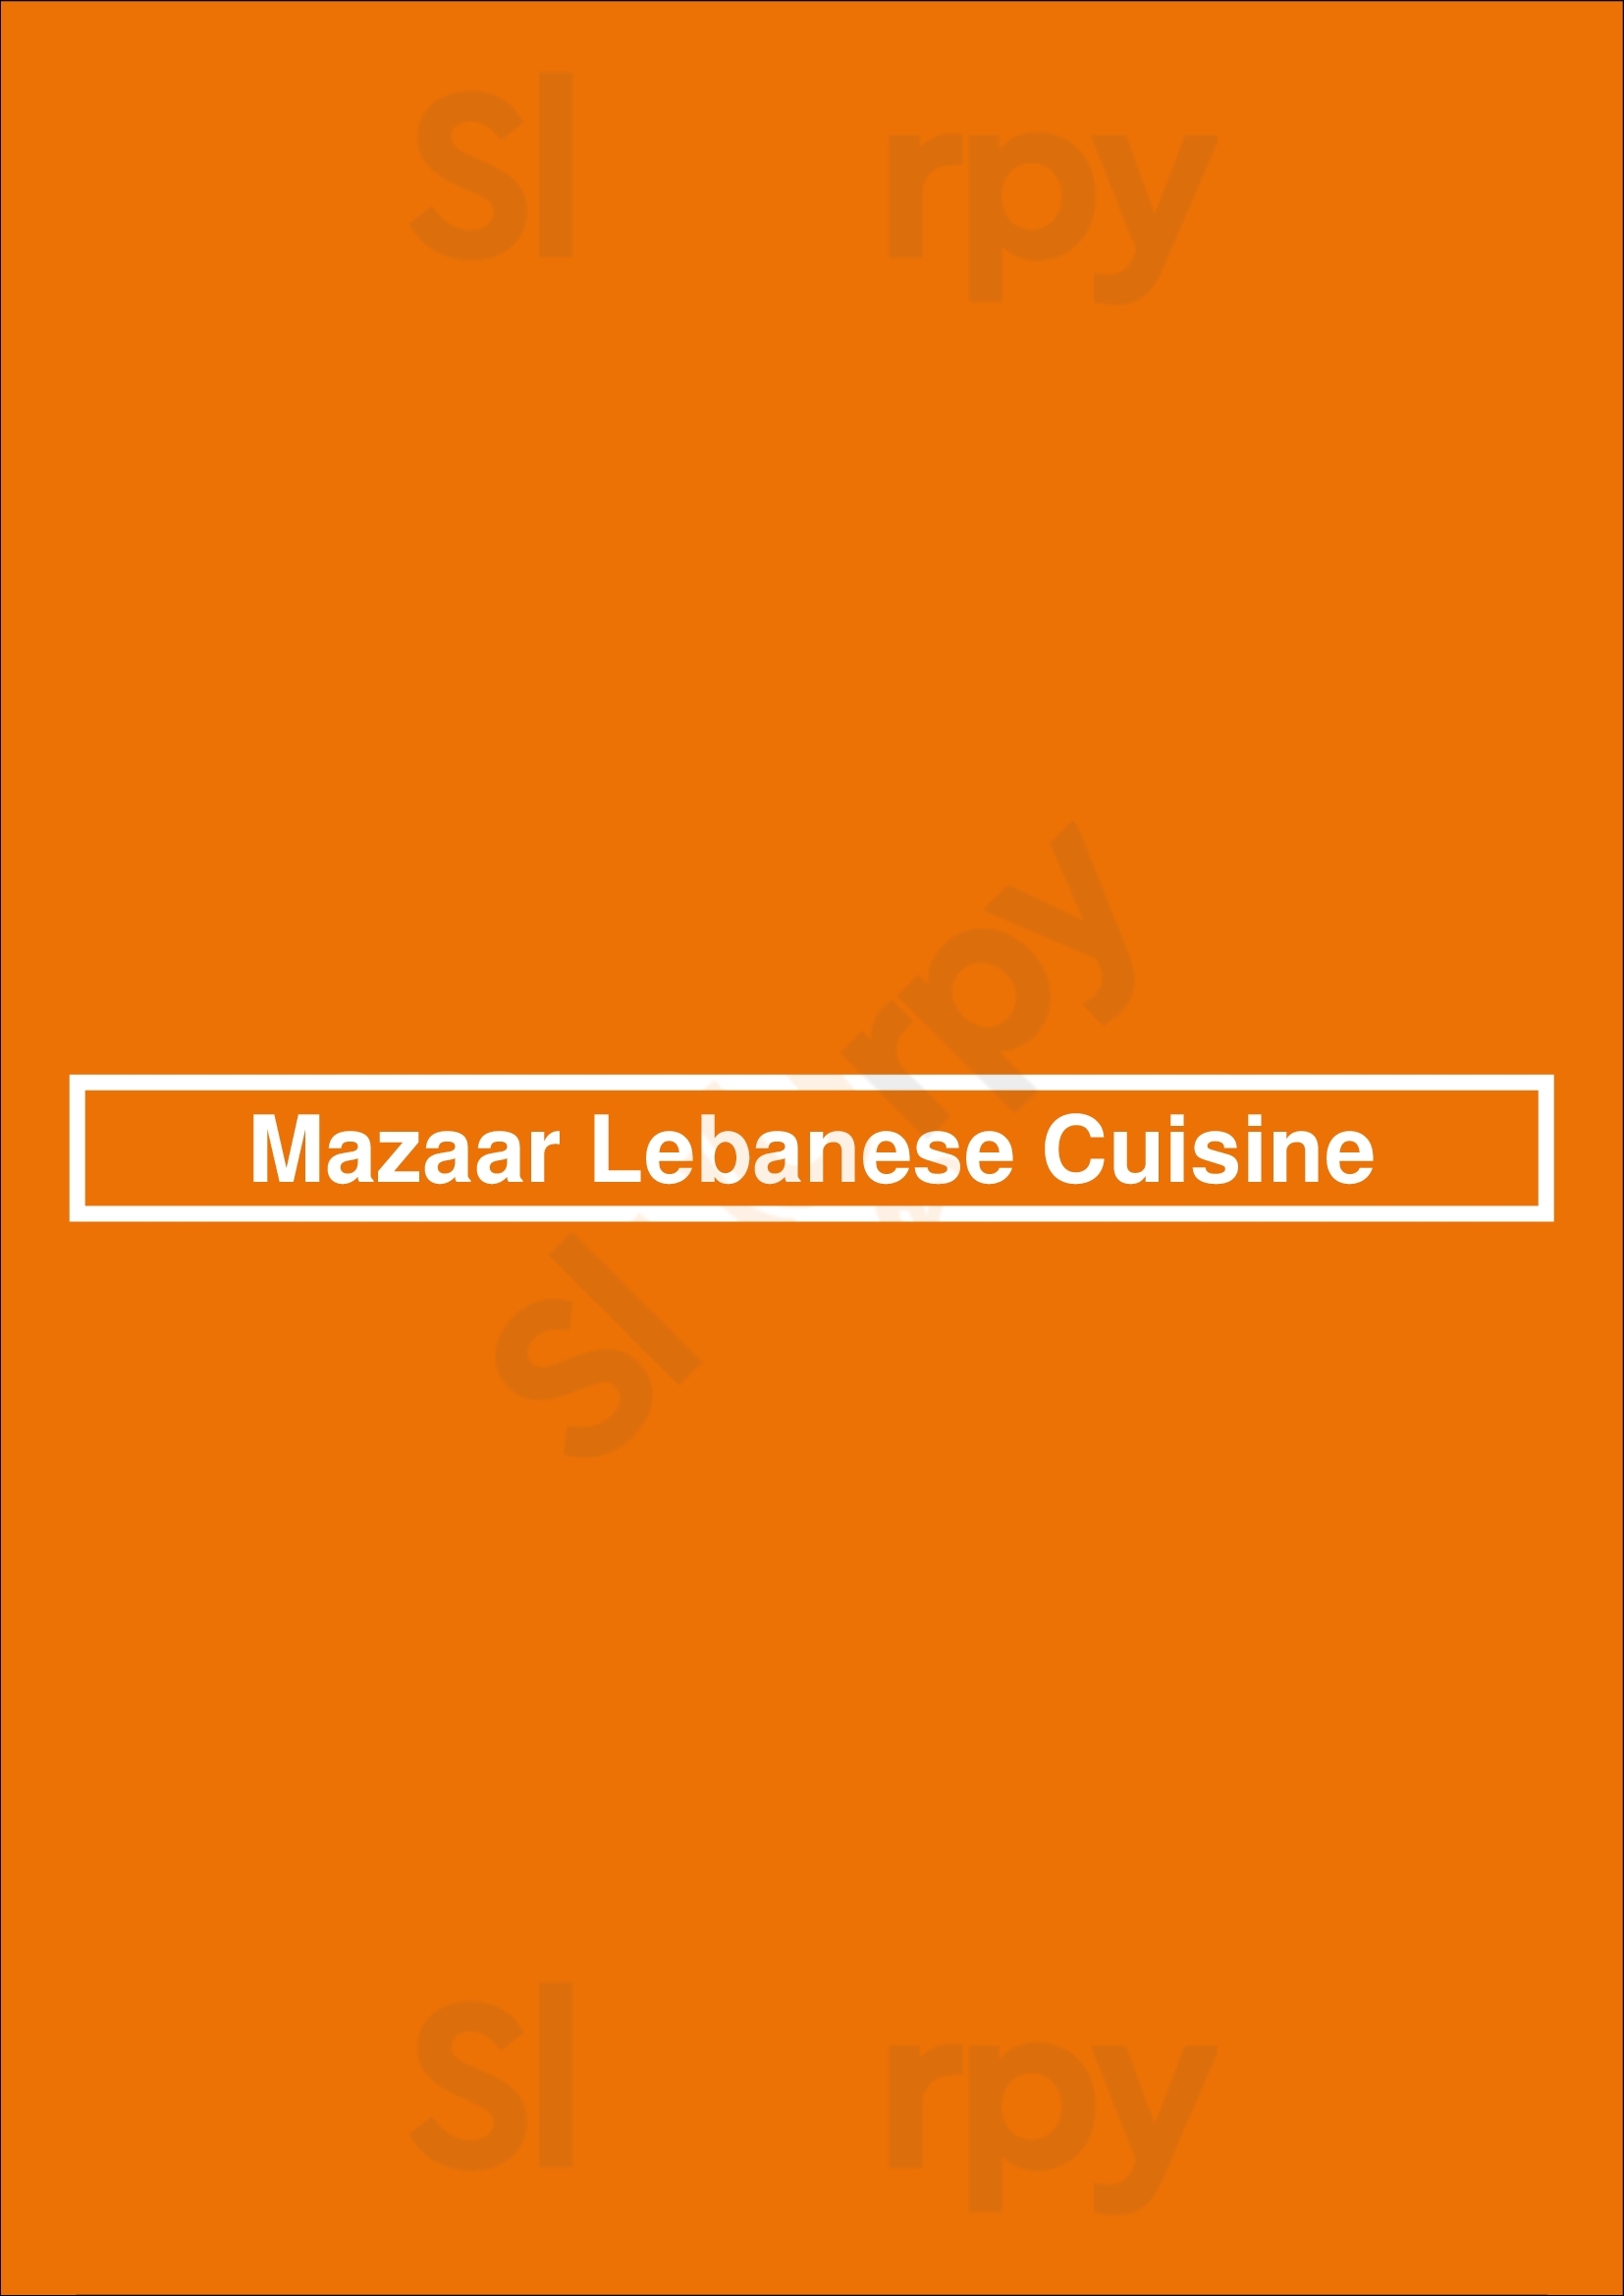 Mazaar Lebanese Cuisine Windsor Menu - 1